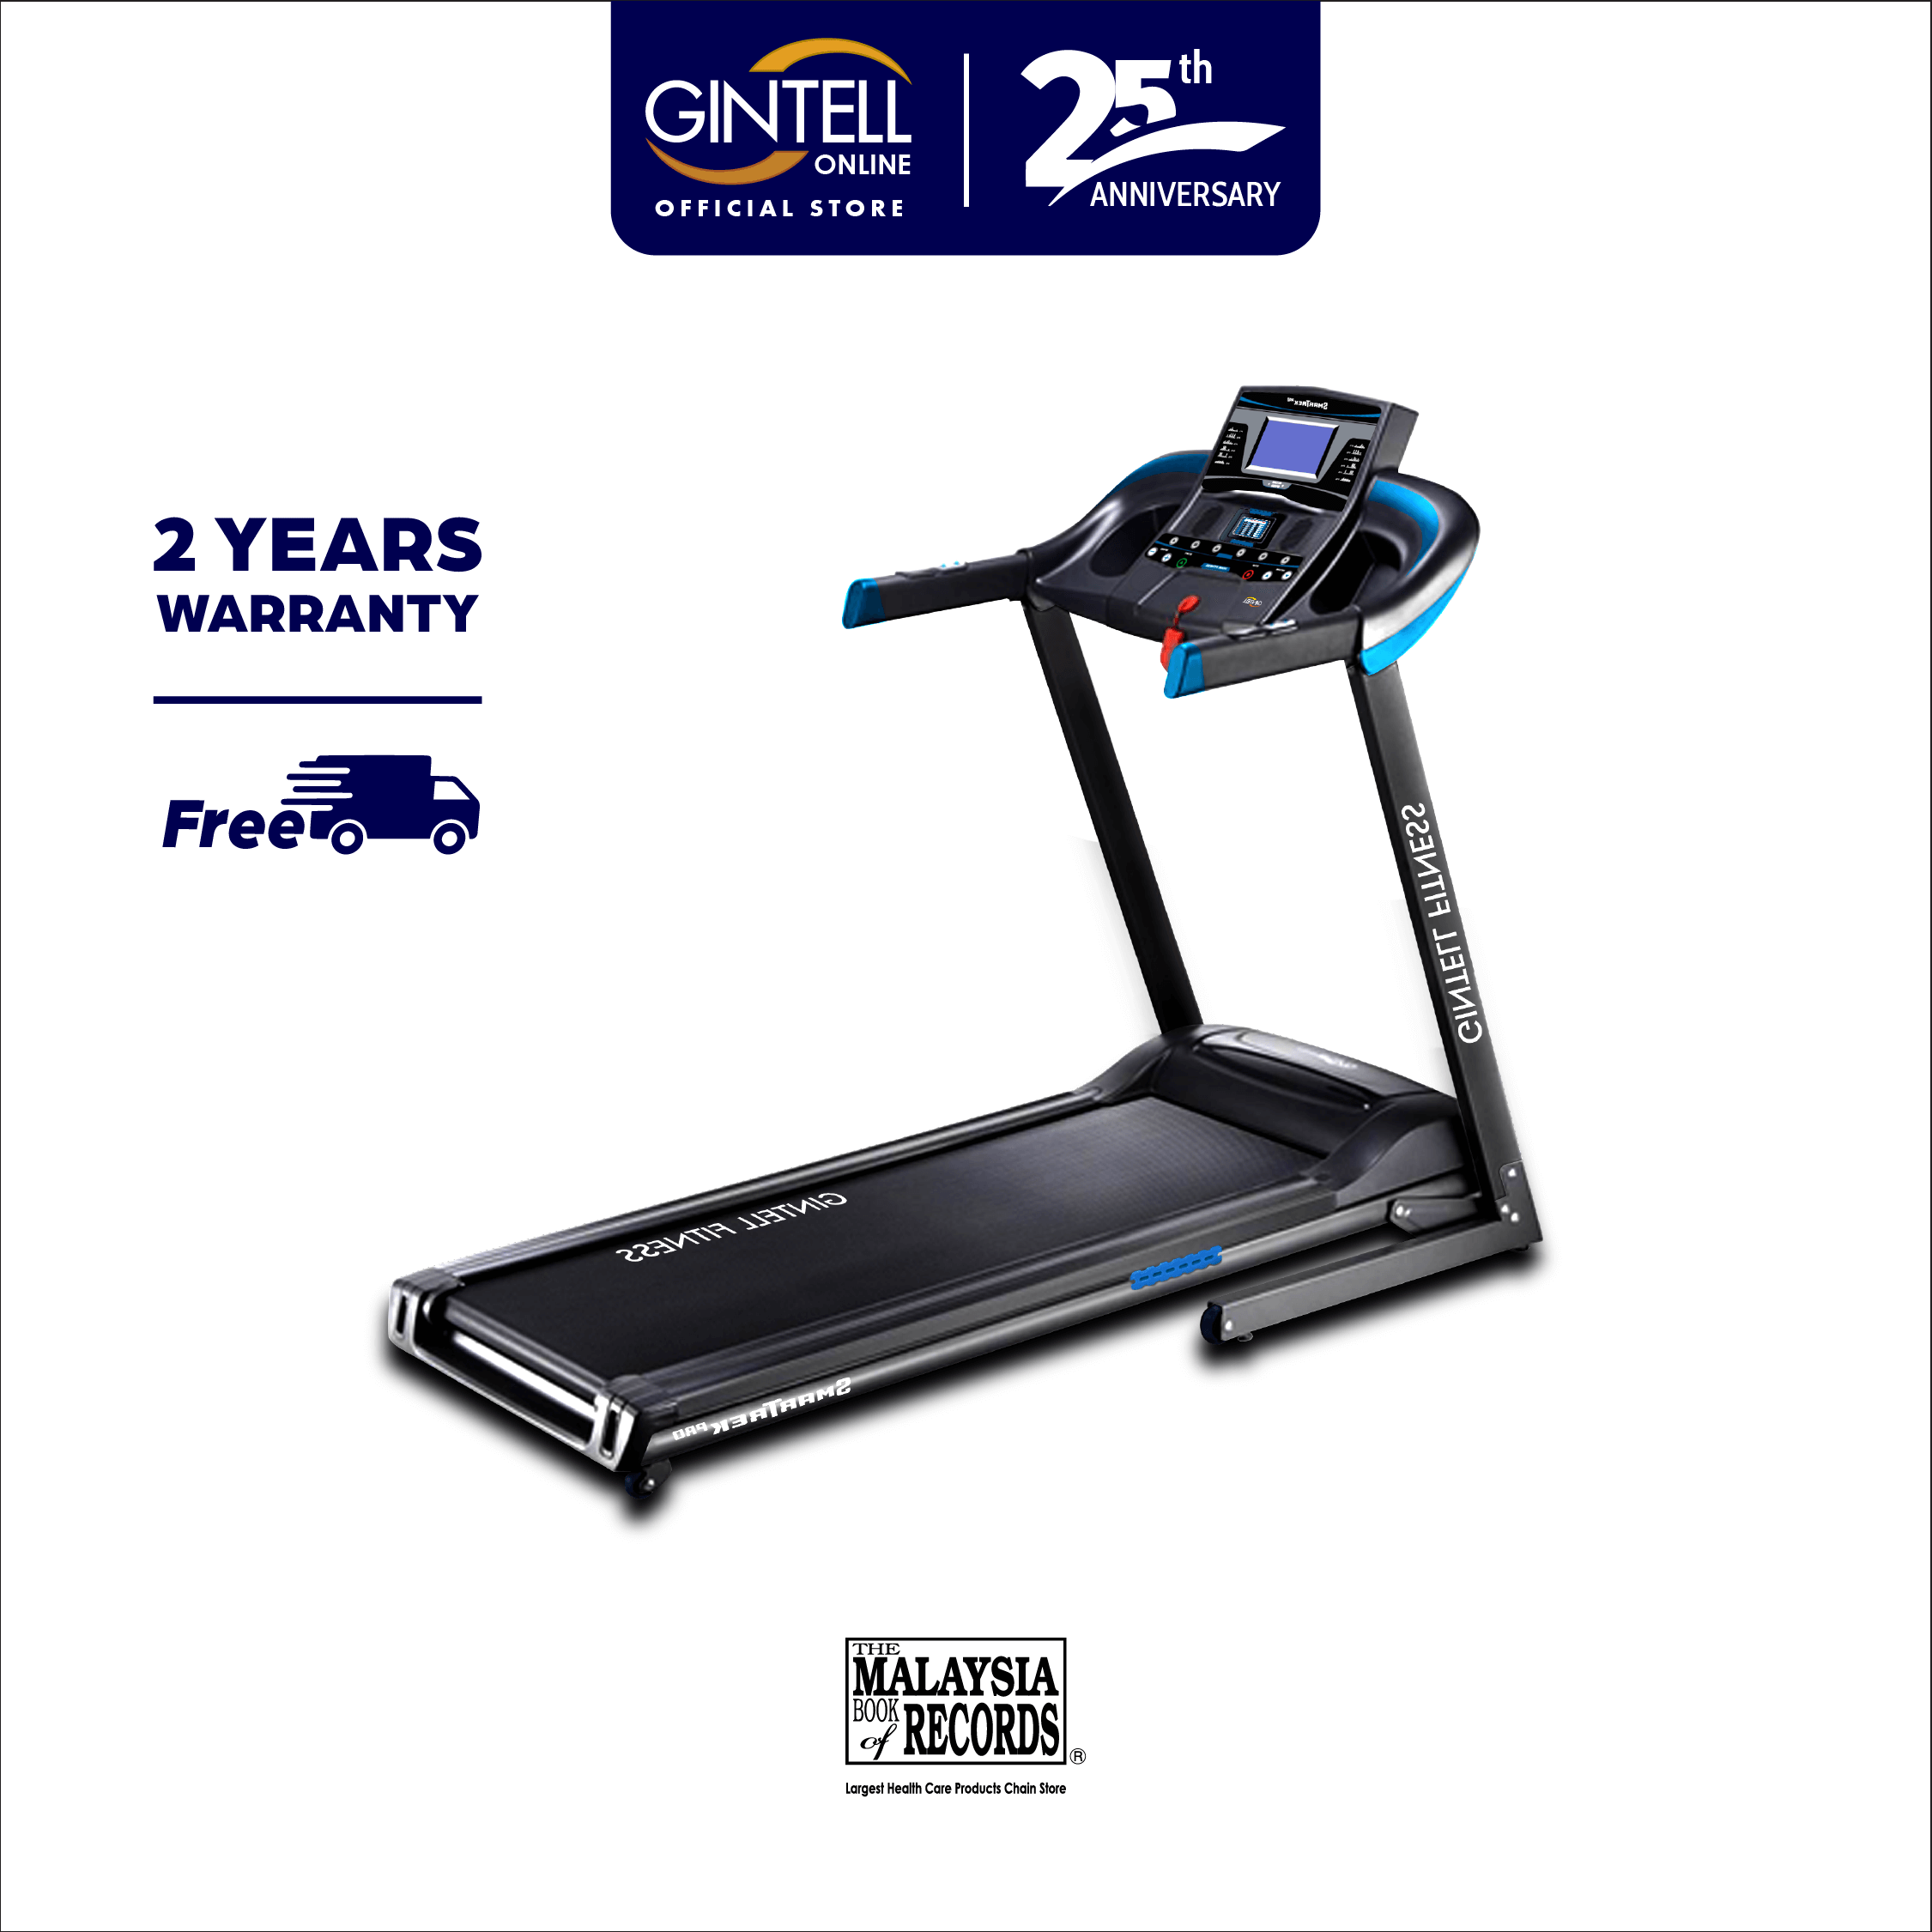 [FREE Shipping] GINTELL SmarTREK Pro Treadmill 3.0HP (New Arrival)